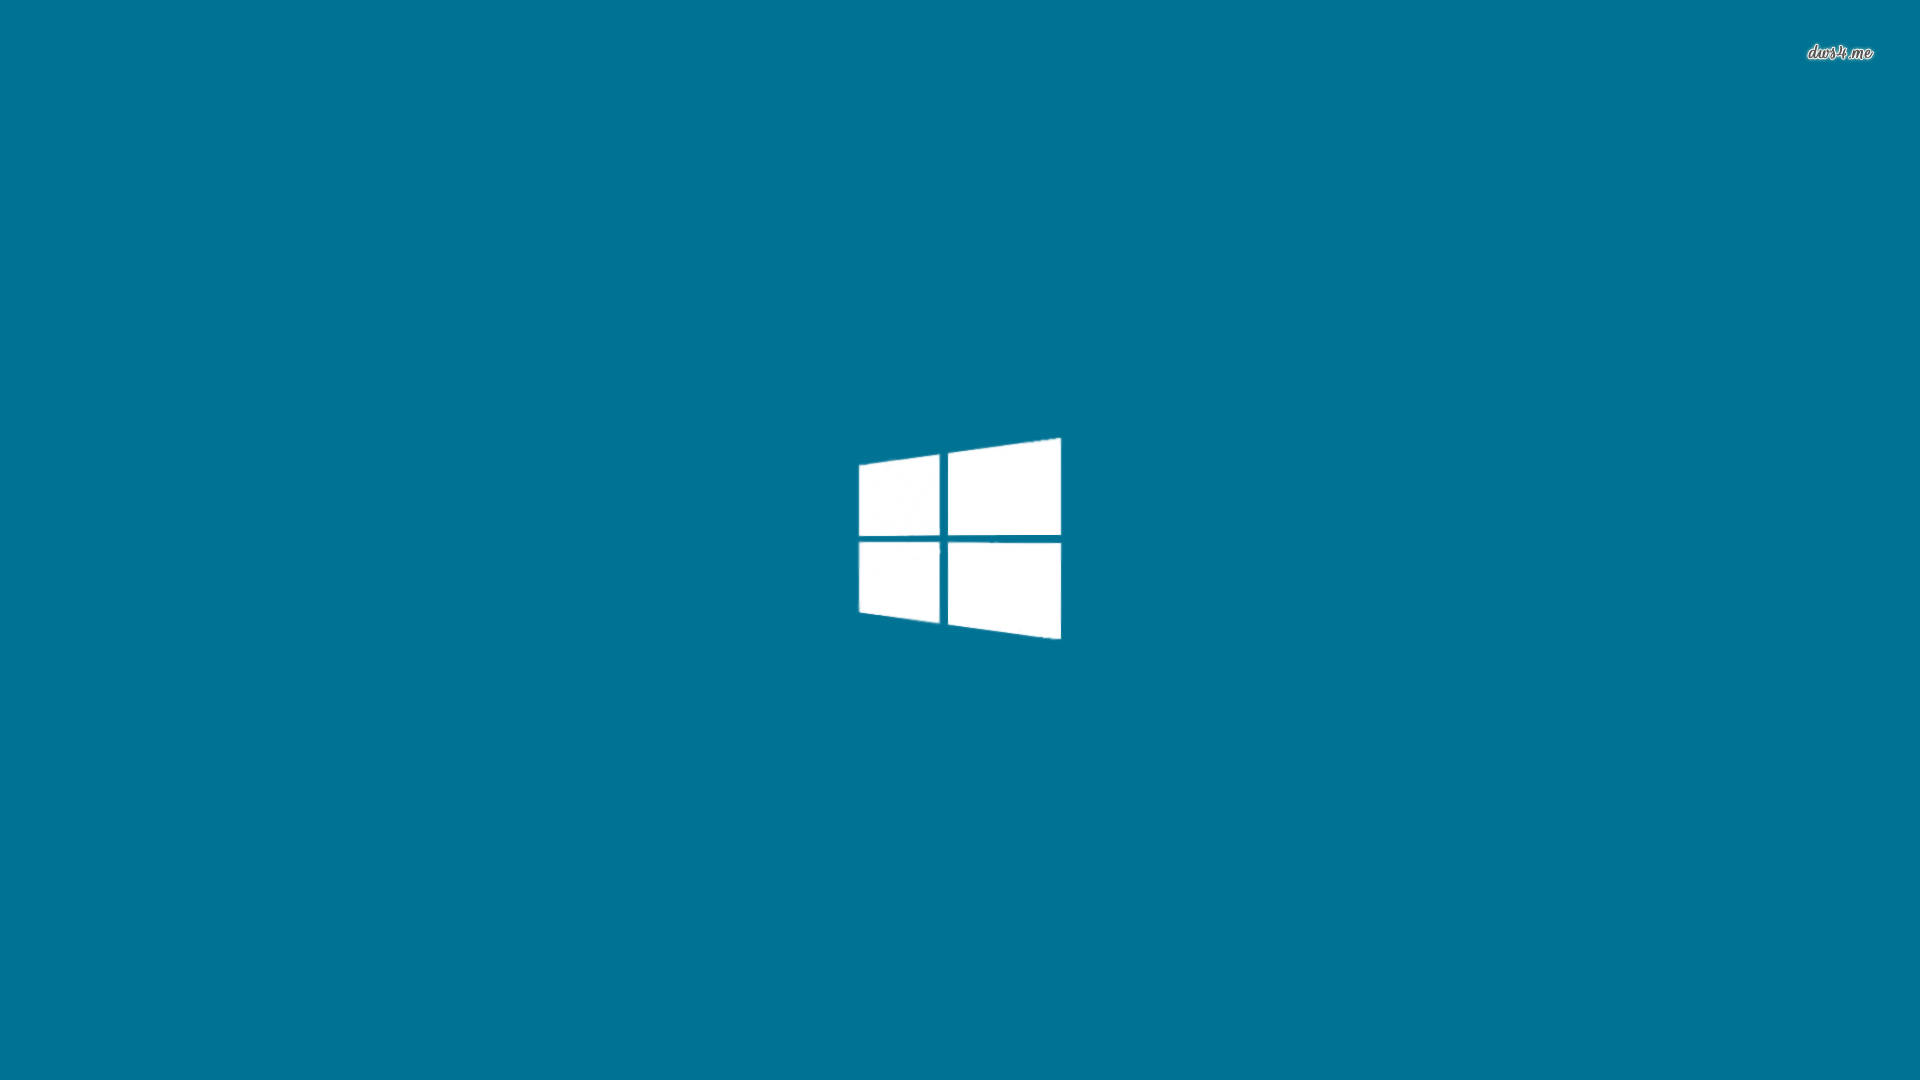 Simple Windows Logo Wallpaper